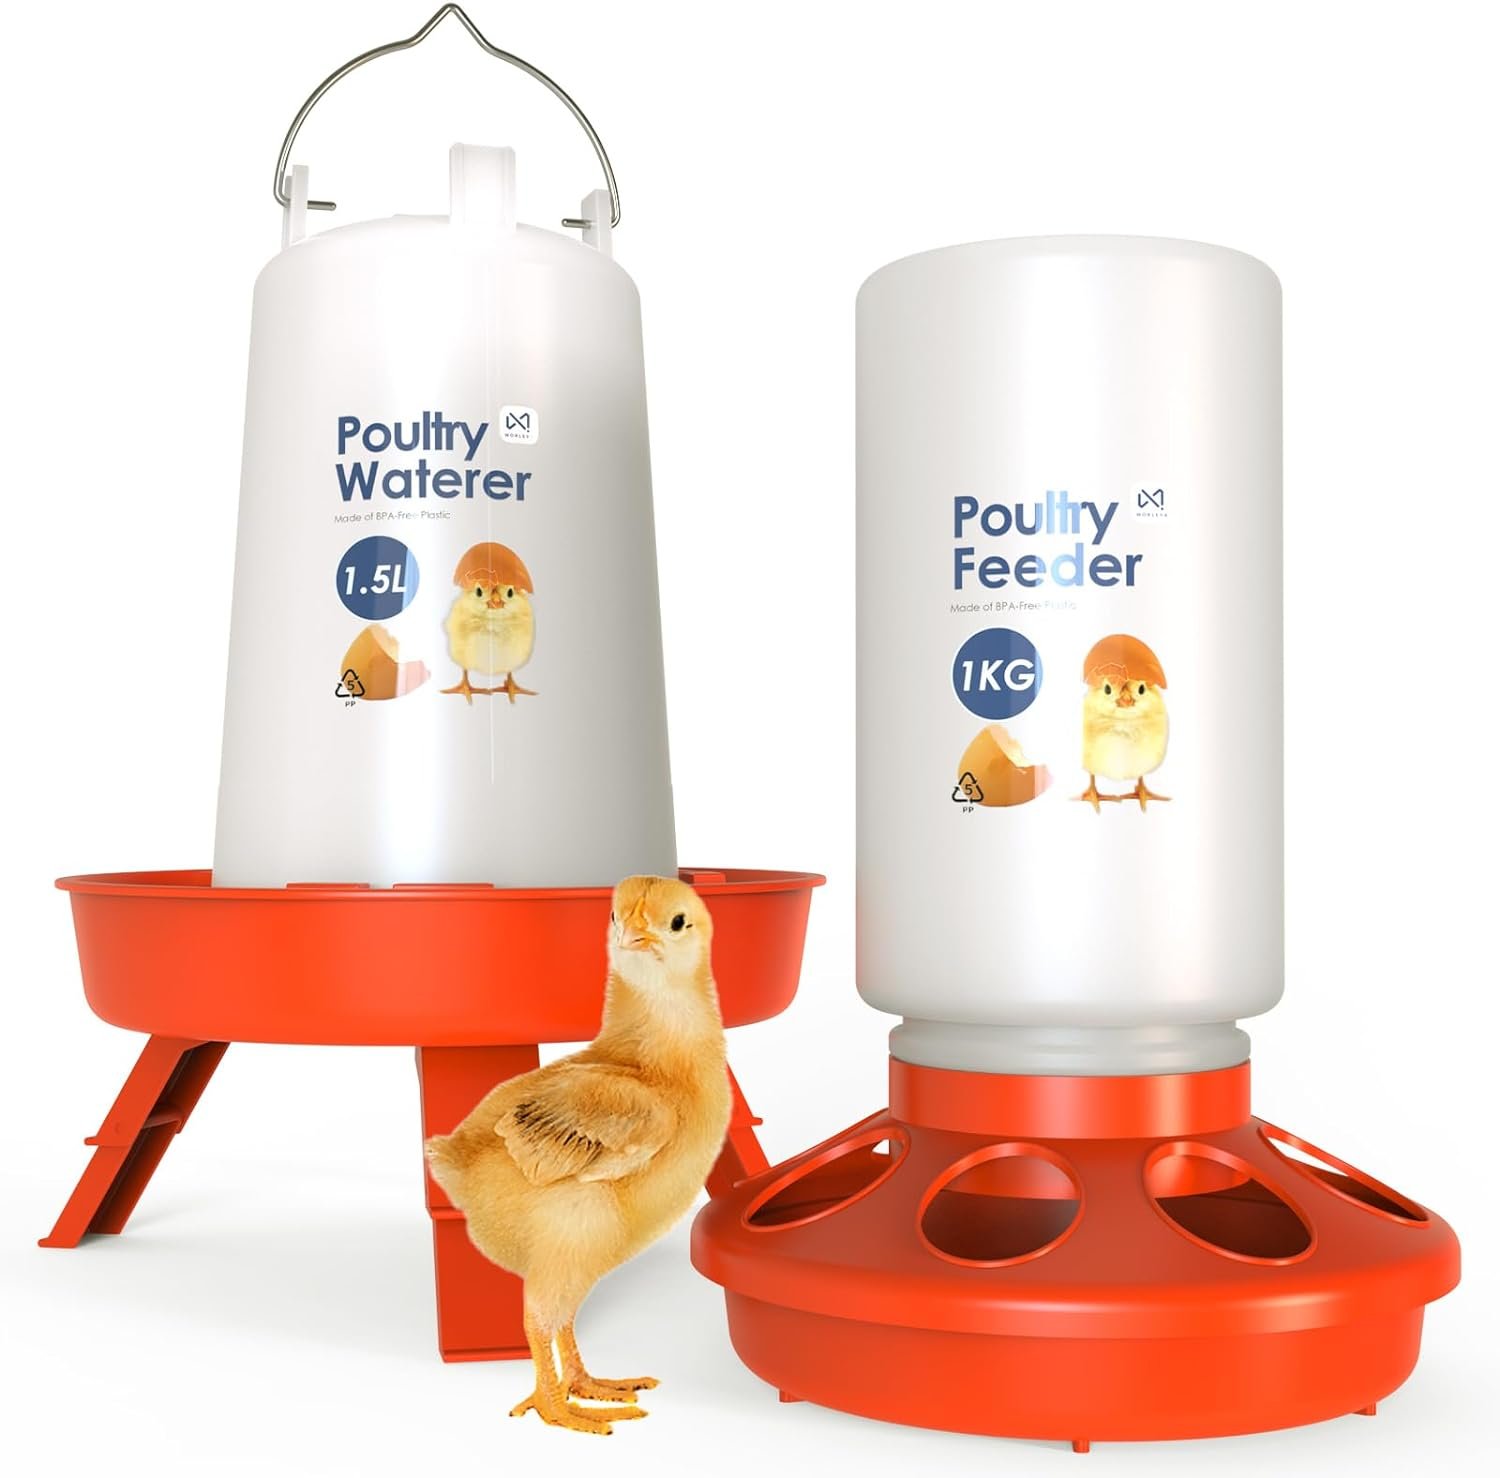 WORLEYX Chick Feeder and Waterer Kit | Chicken Feeder and Waterer Set Versatile for Chickens, Ducks, Quails | Hanging Design for Convenience | Baby Chicken Supplies